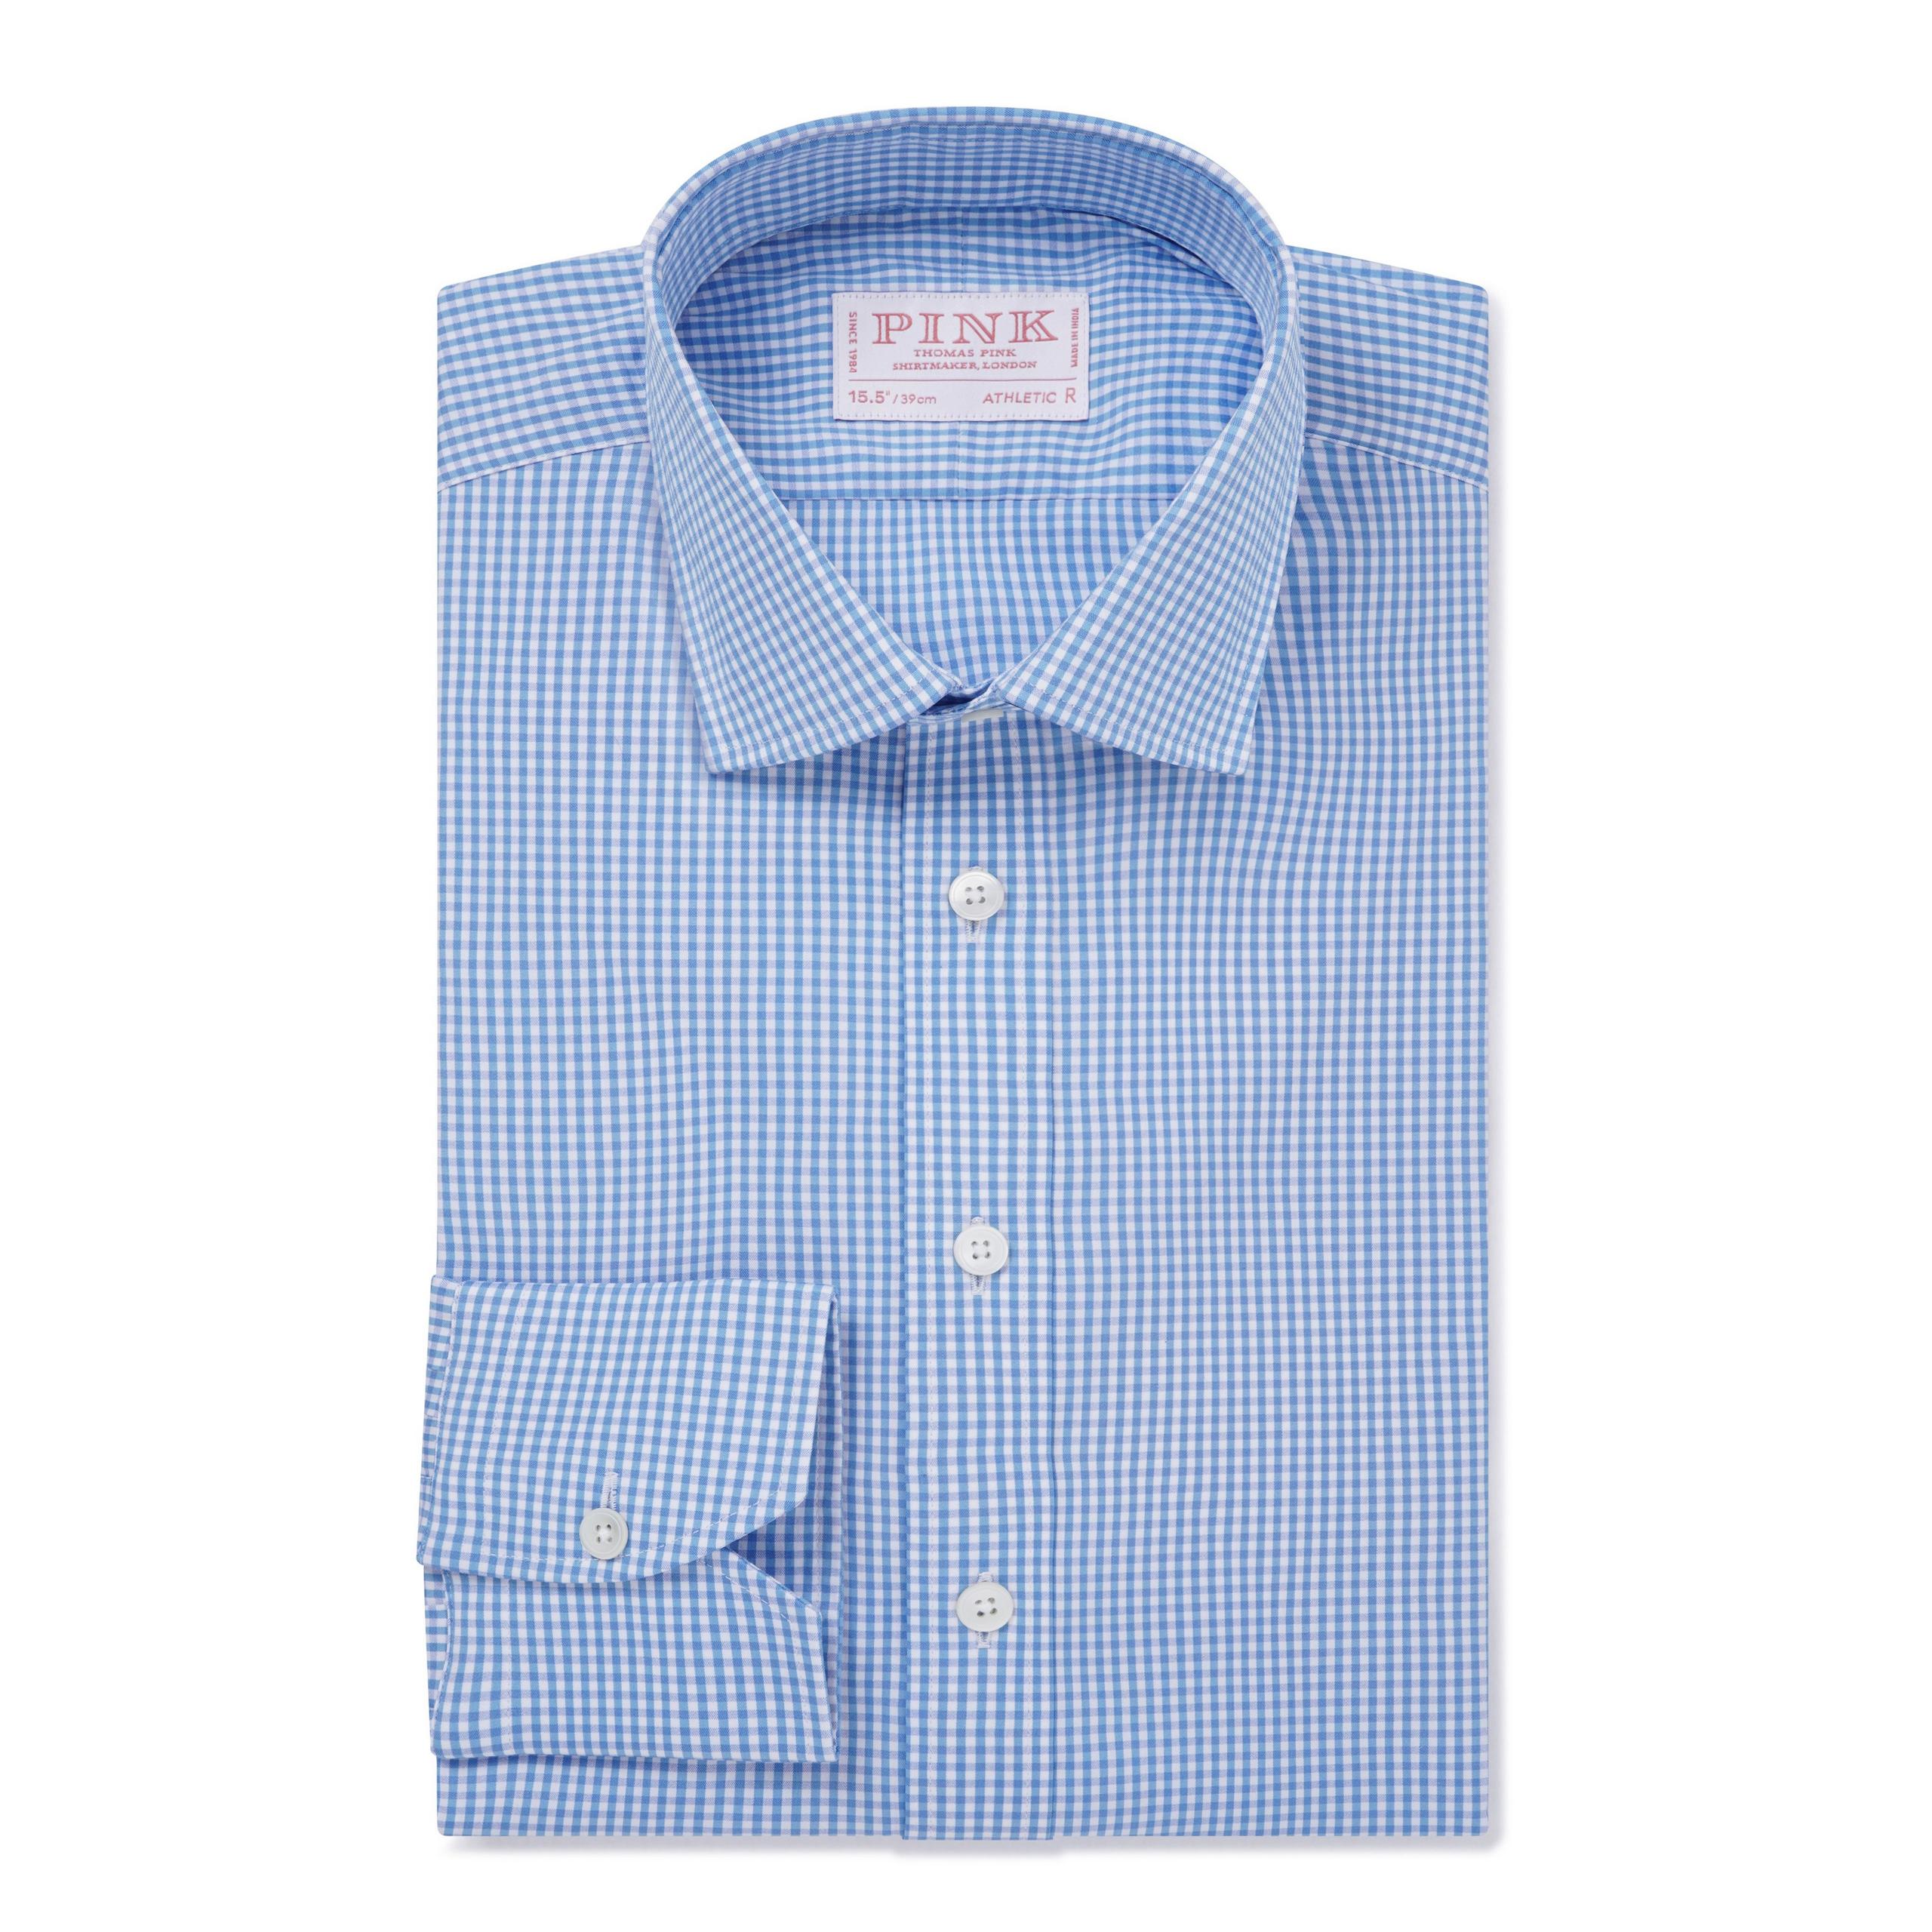 Men's Shirt Bundle - 30% Discount | Thomas Pink